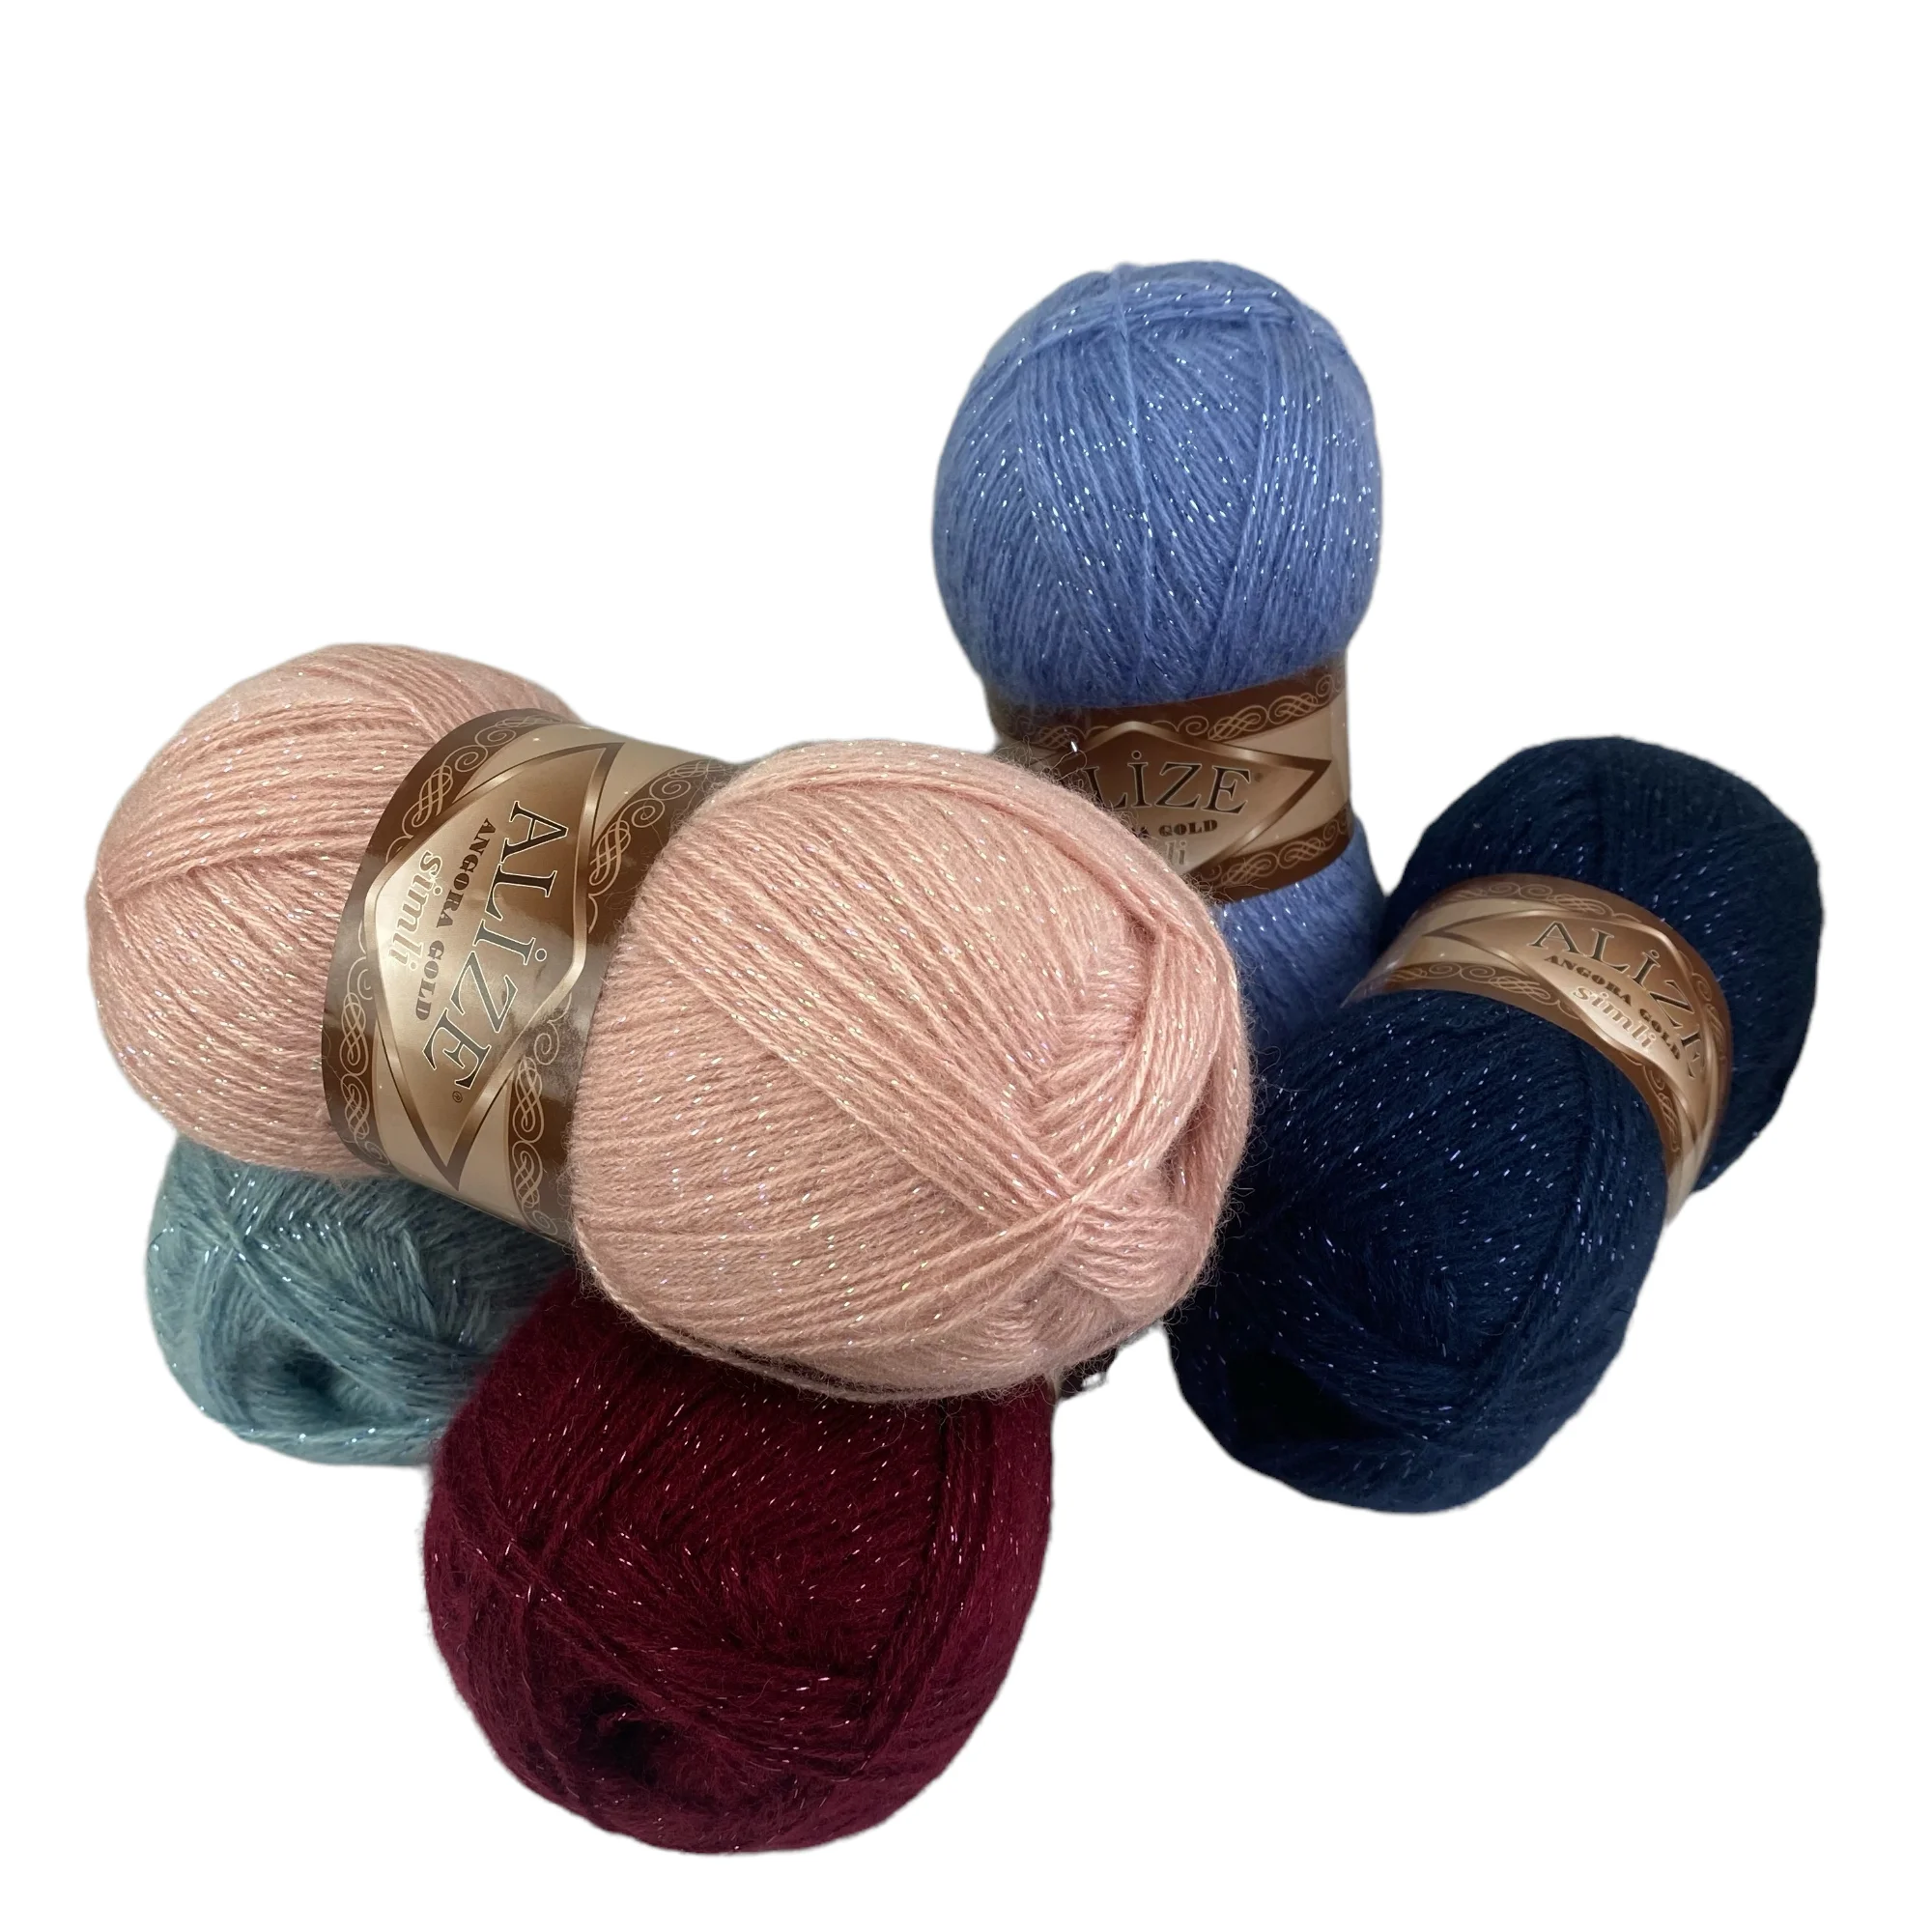 Alize Angora Gold Simli Yarn  Crochet String - Gold Yarn 500mt-100gr %5  Lurex-%20 - Aliexpress